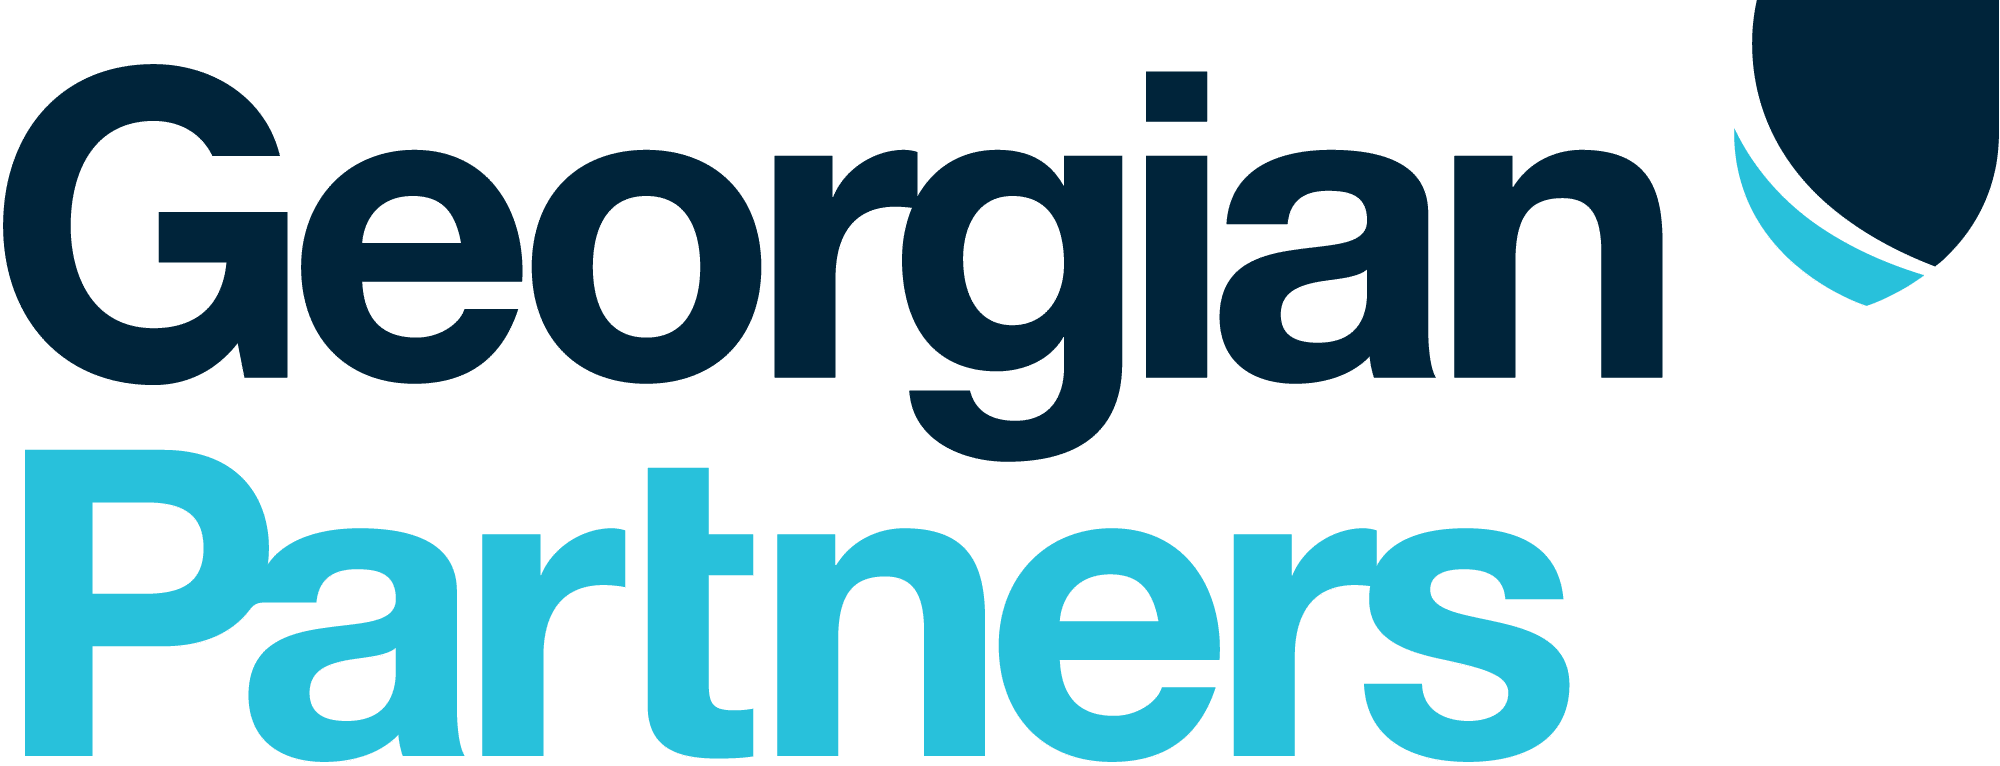 Georgian Partners Logo